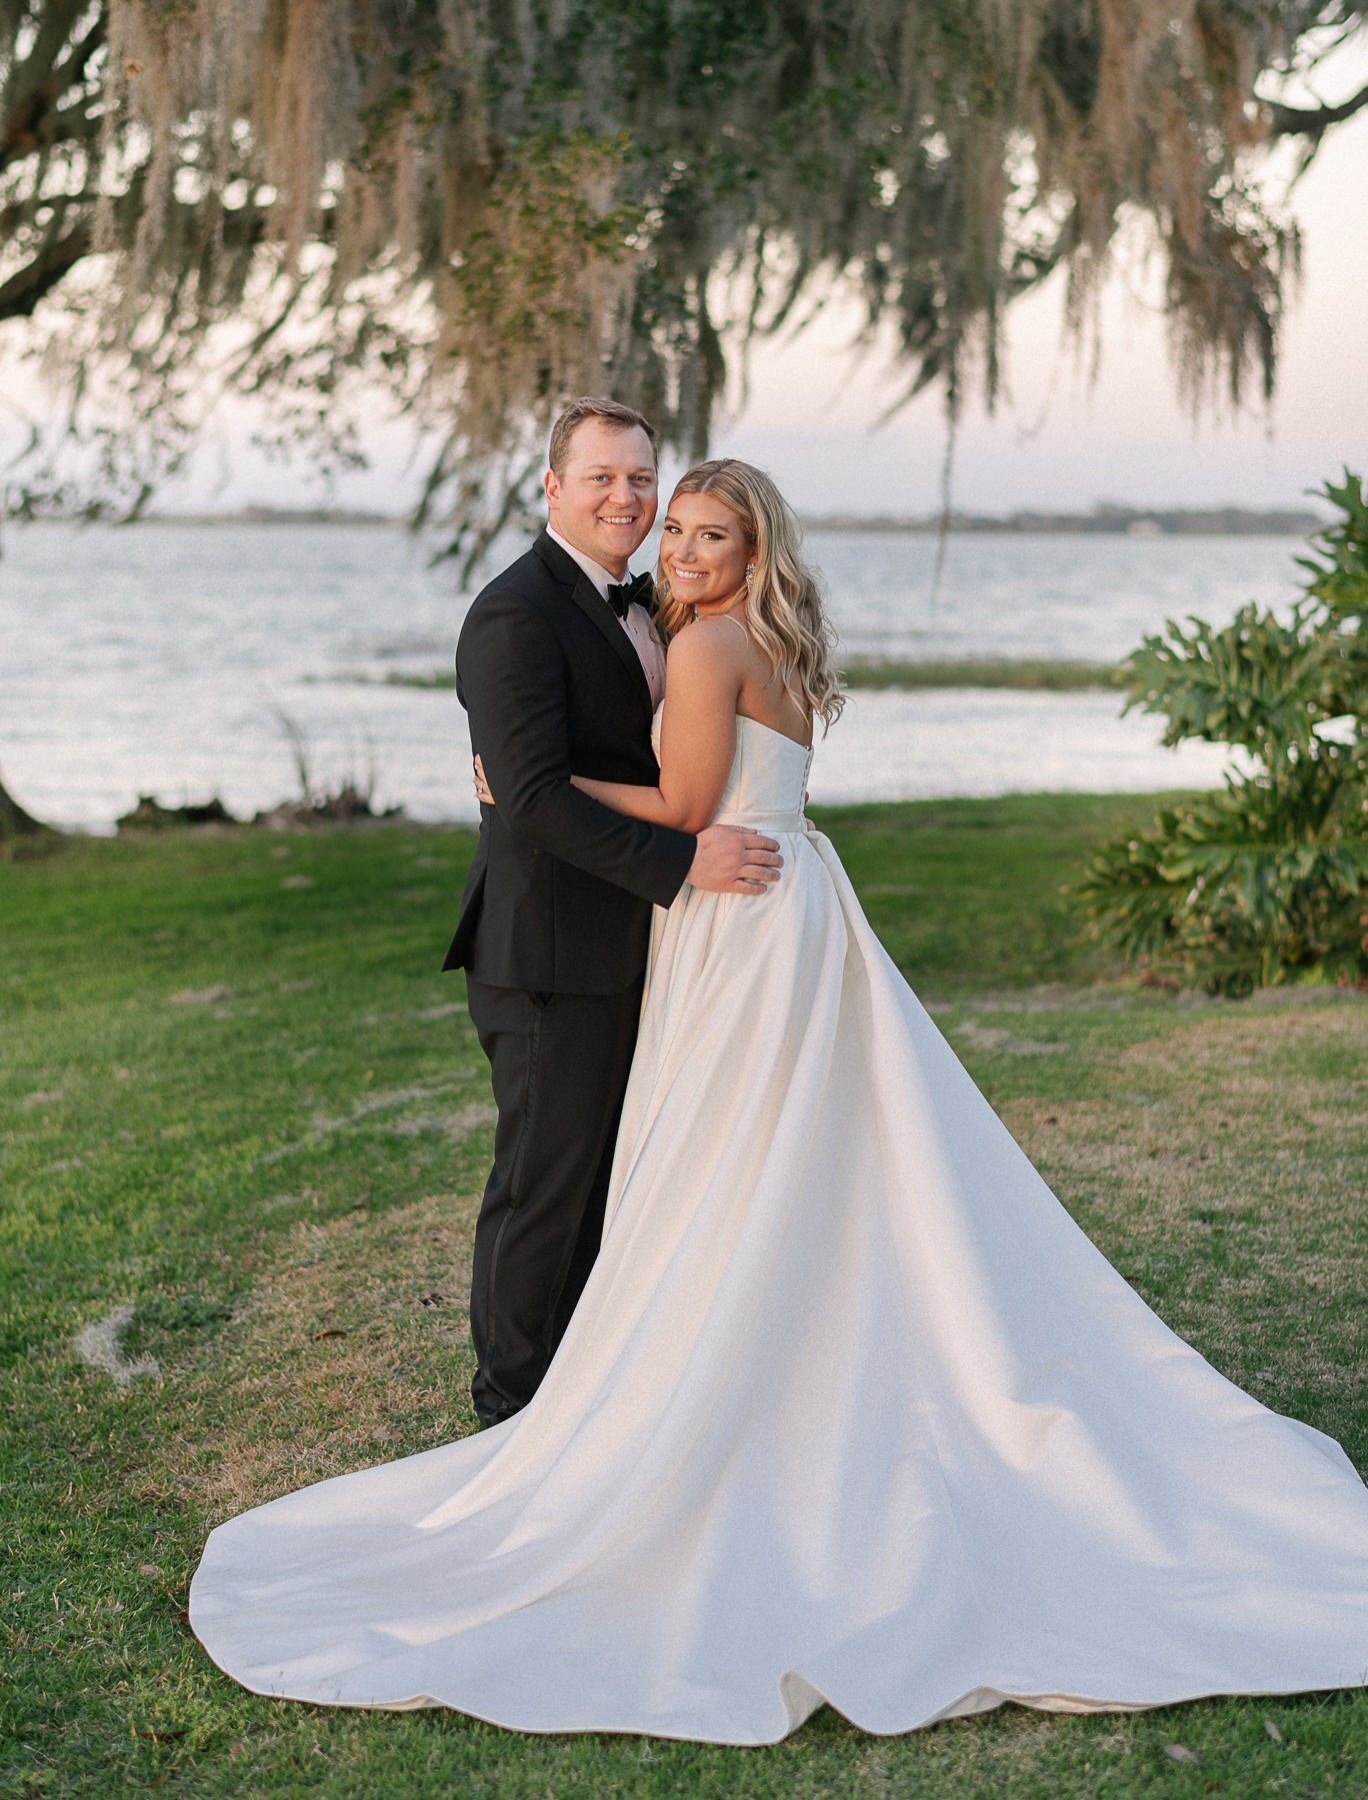  Sunglow Photography, Adams Estate, Top Florida Wedding Venue, Modern Emotional Wedding Photography 